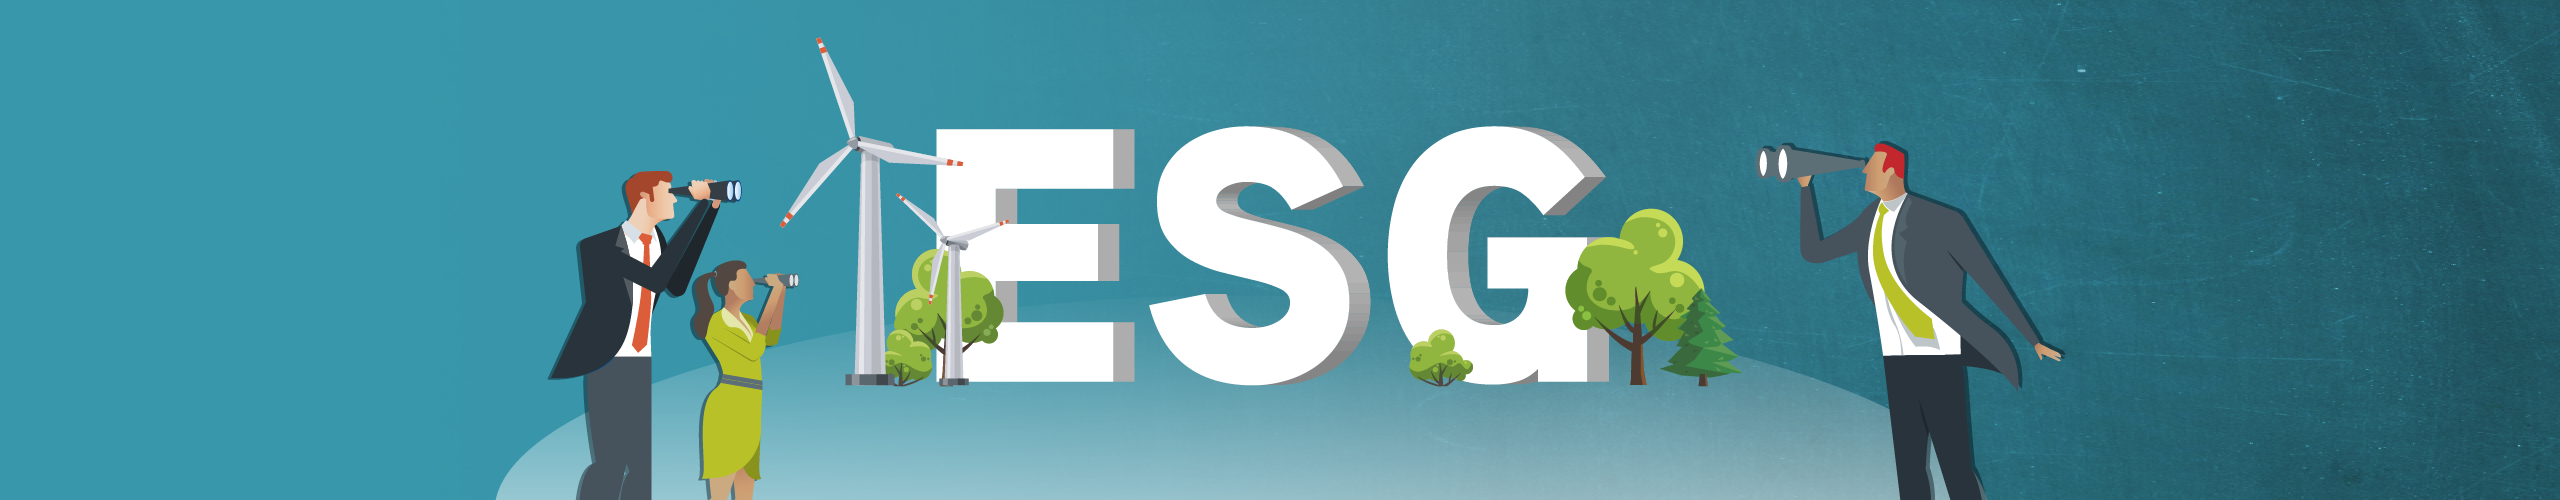 ESG Investing promo banner